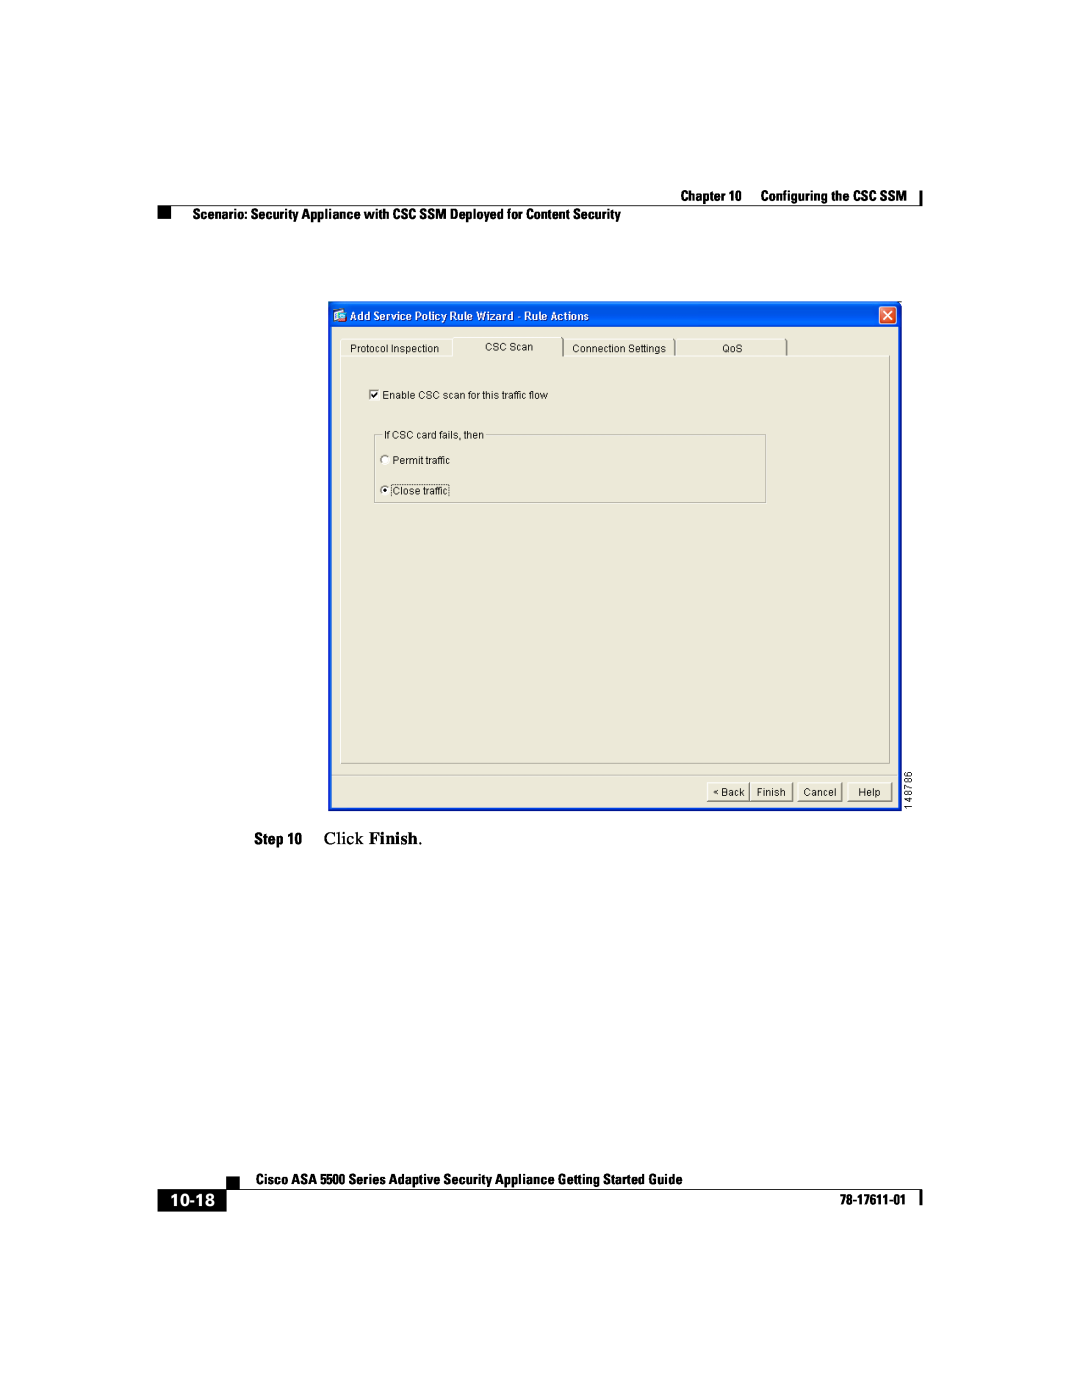 Cisco Systems ASA 5500 manual 10-18, Click Finish, Configuring the CSC SSM, 78-17611-01 